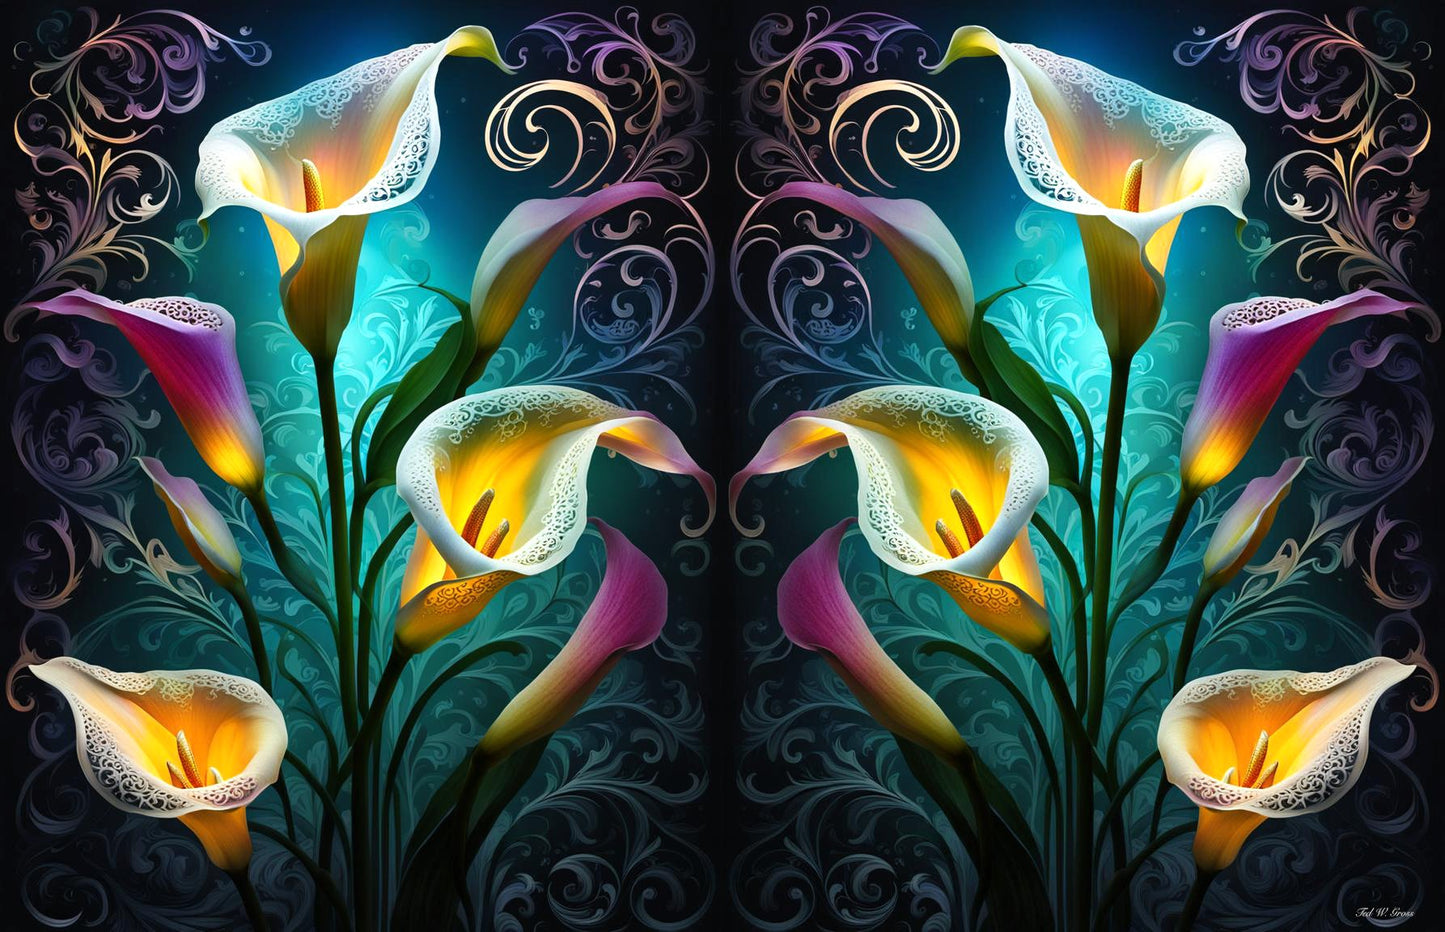 Cala Lily Mosaic - Floral & Filigree Digital Art Art > Digital Art > Cobwebs Of The Mind > Abstract > Digital Compositions